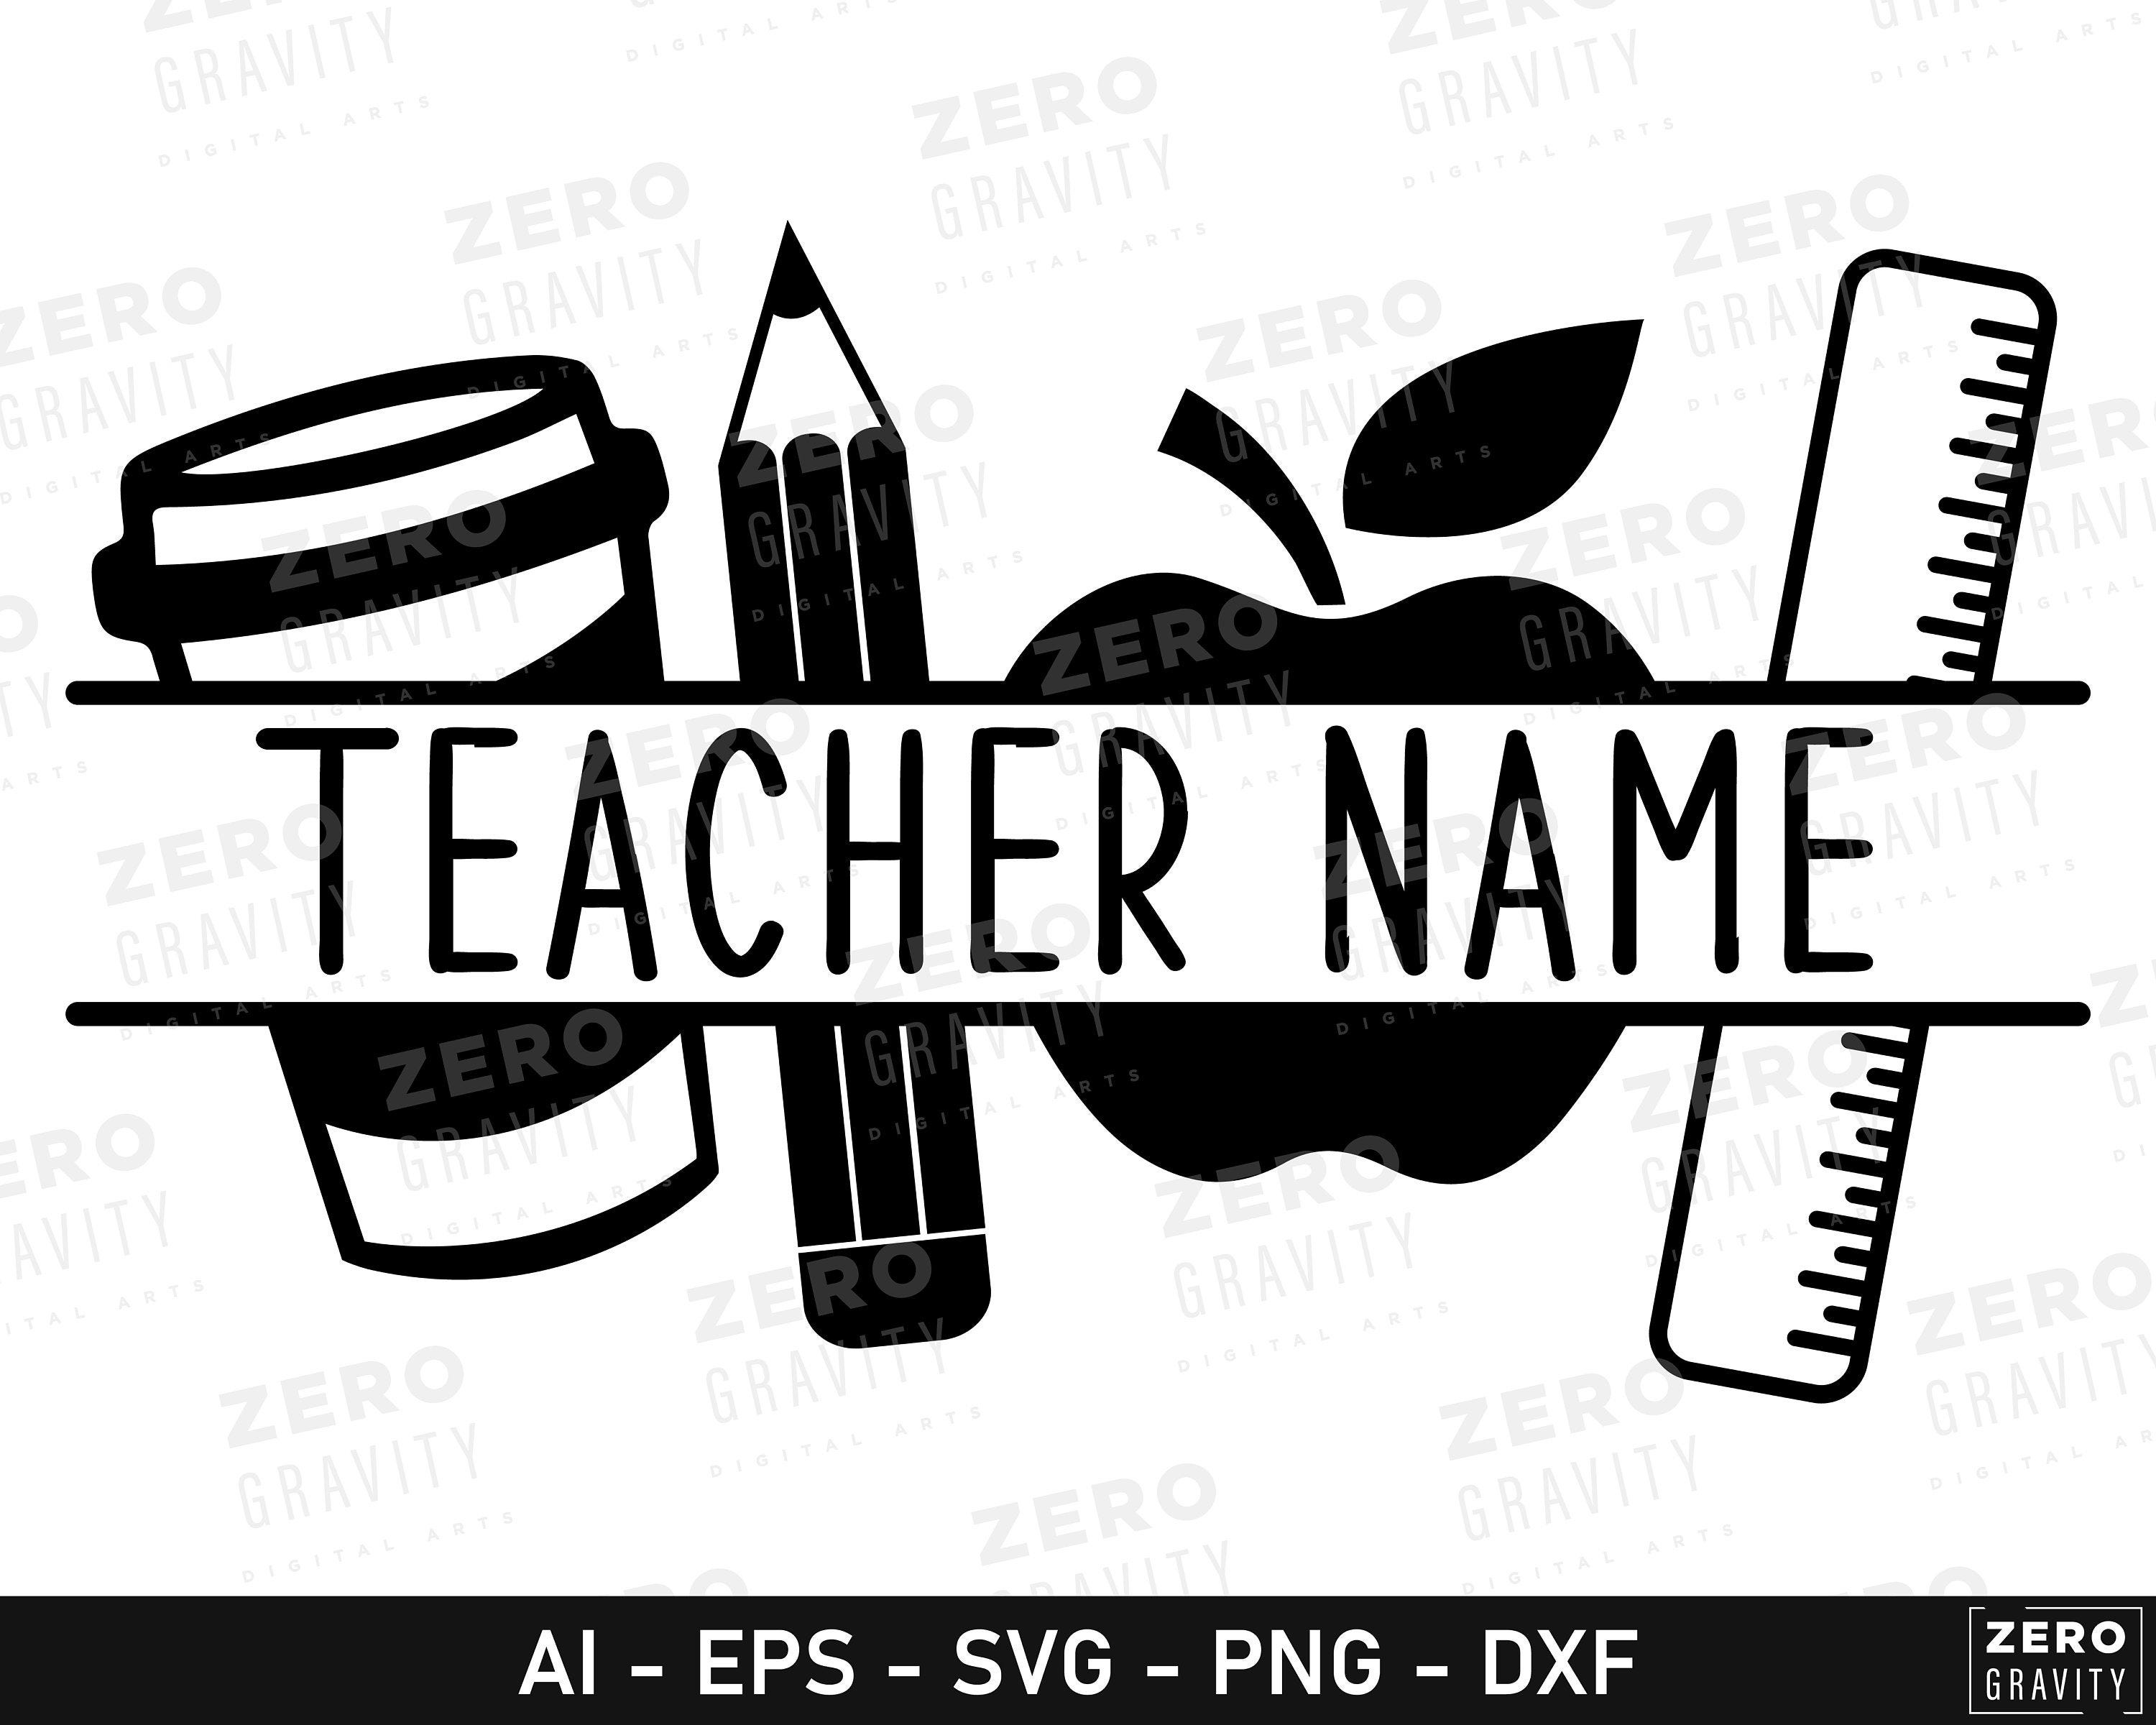 Custom Teacher SVG, Teacher Name SVG, Printable Teacher Name PNG, Teacher Cricut Files, Digital Download Teacher Name Svg for Shirts, Caps